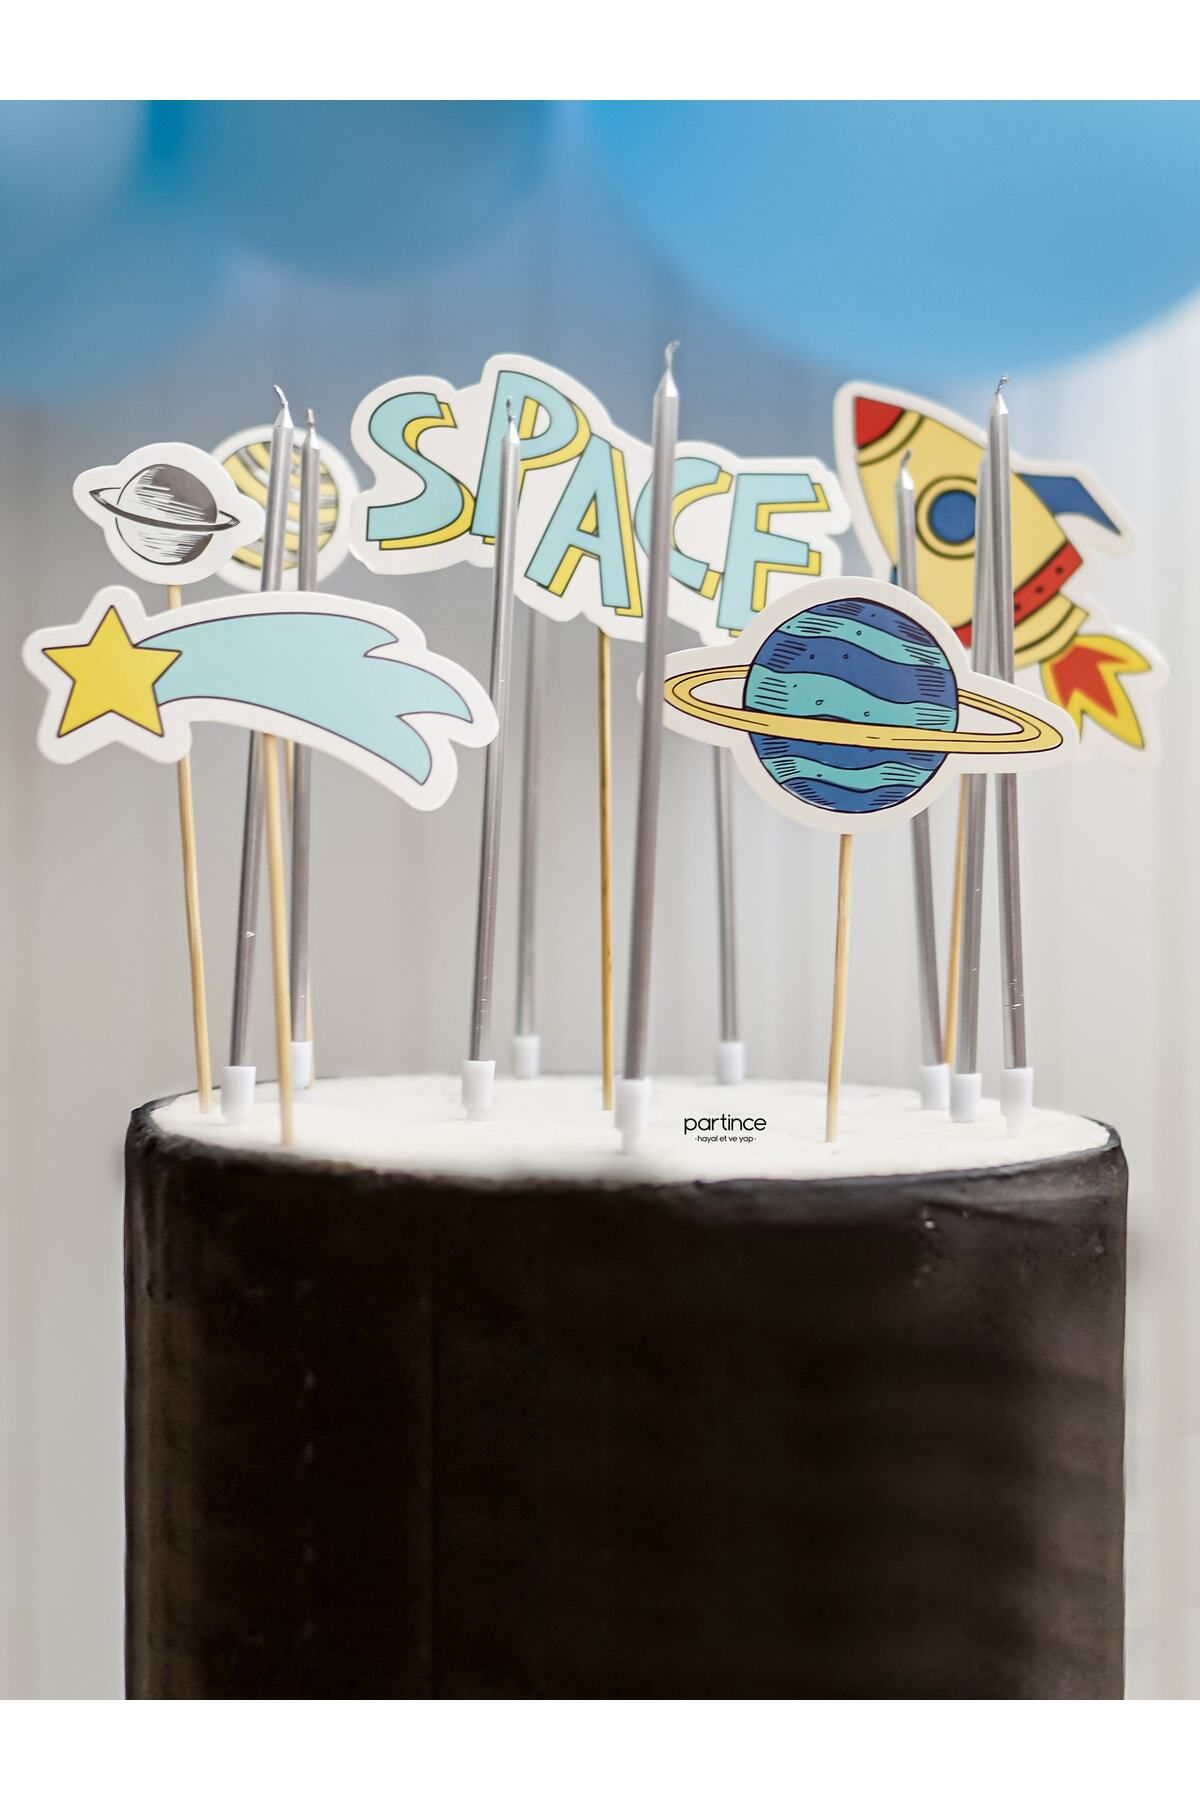 partince 2'li Set 6'lı Space Uzay Pasta Süsü Cake Topper 12'li Krom Gümüş Mum Doğum Günü Pasta Süsleme Seti